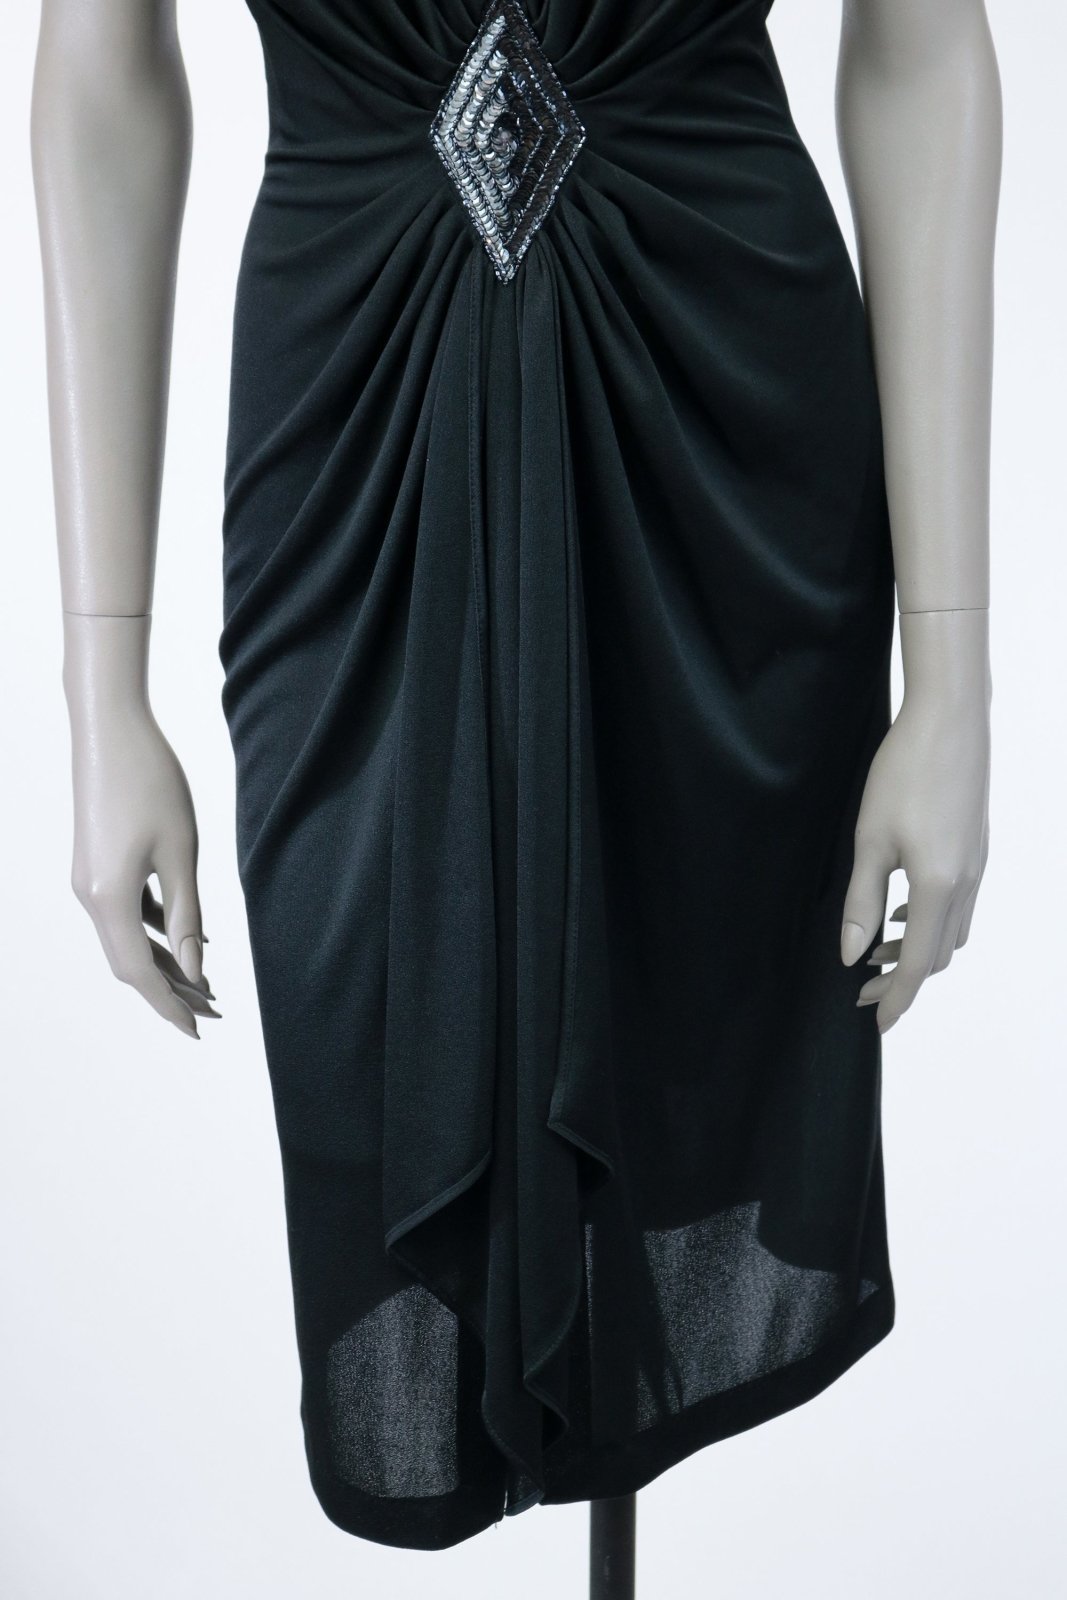 1980s Black Plunging Draped Dress - Floria Vintage